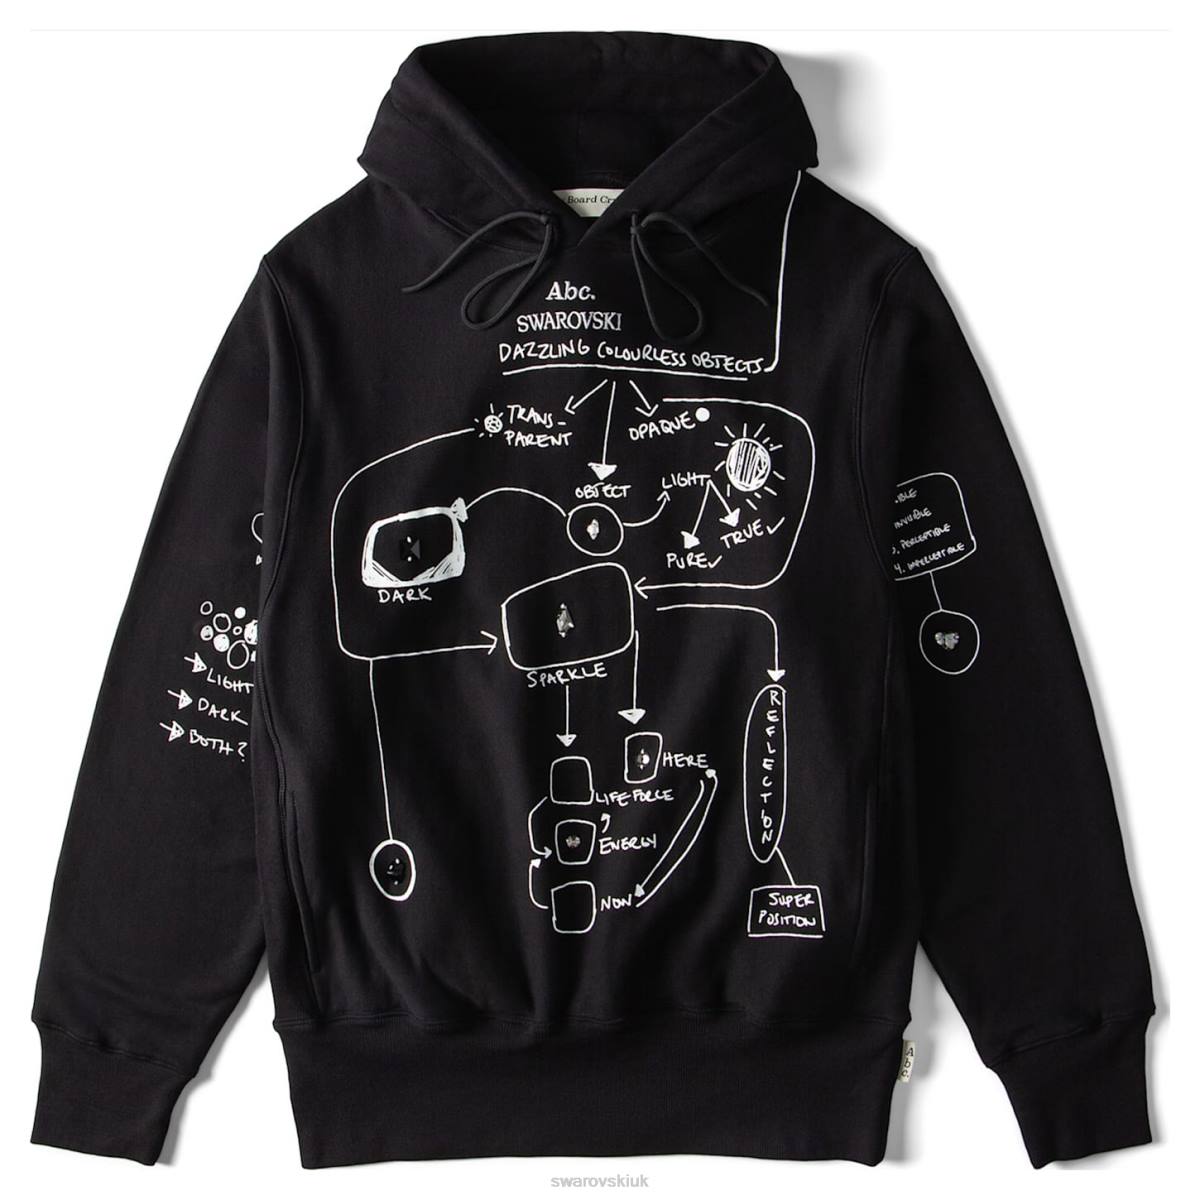 Hoodies Swarovski Dazzling Colorless Objects hoodie Black 48JX1509